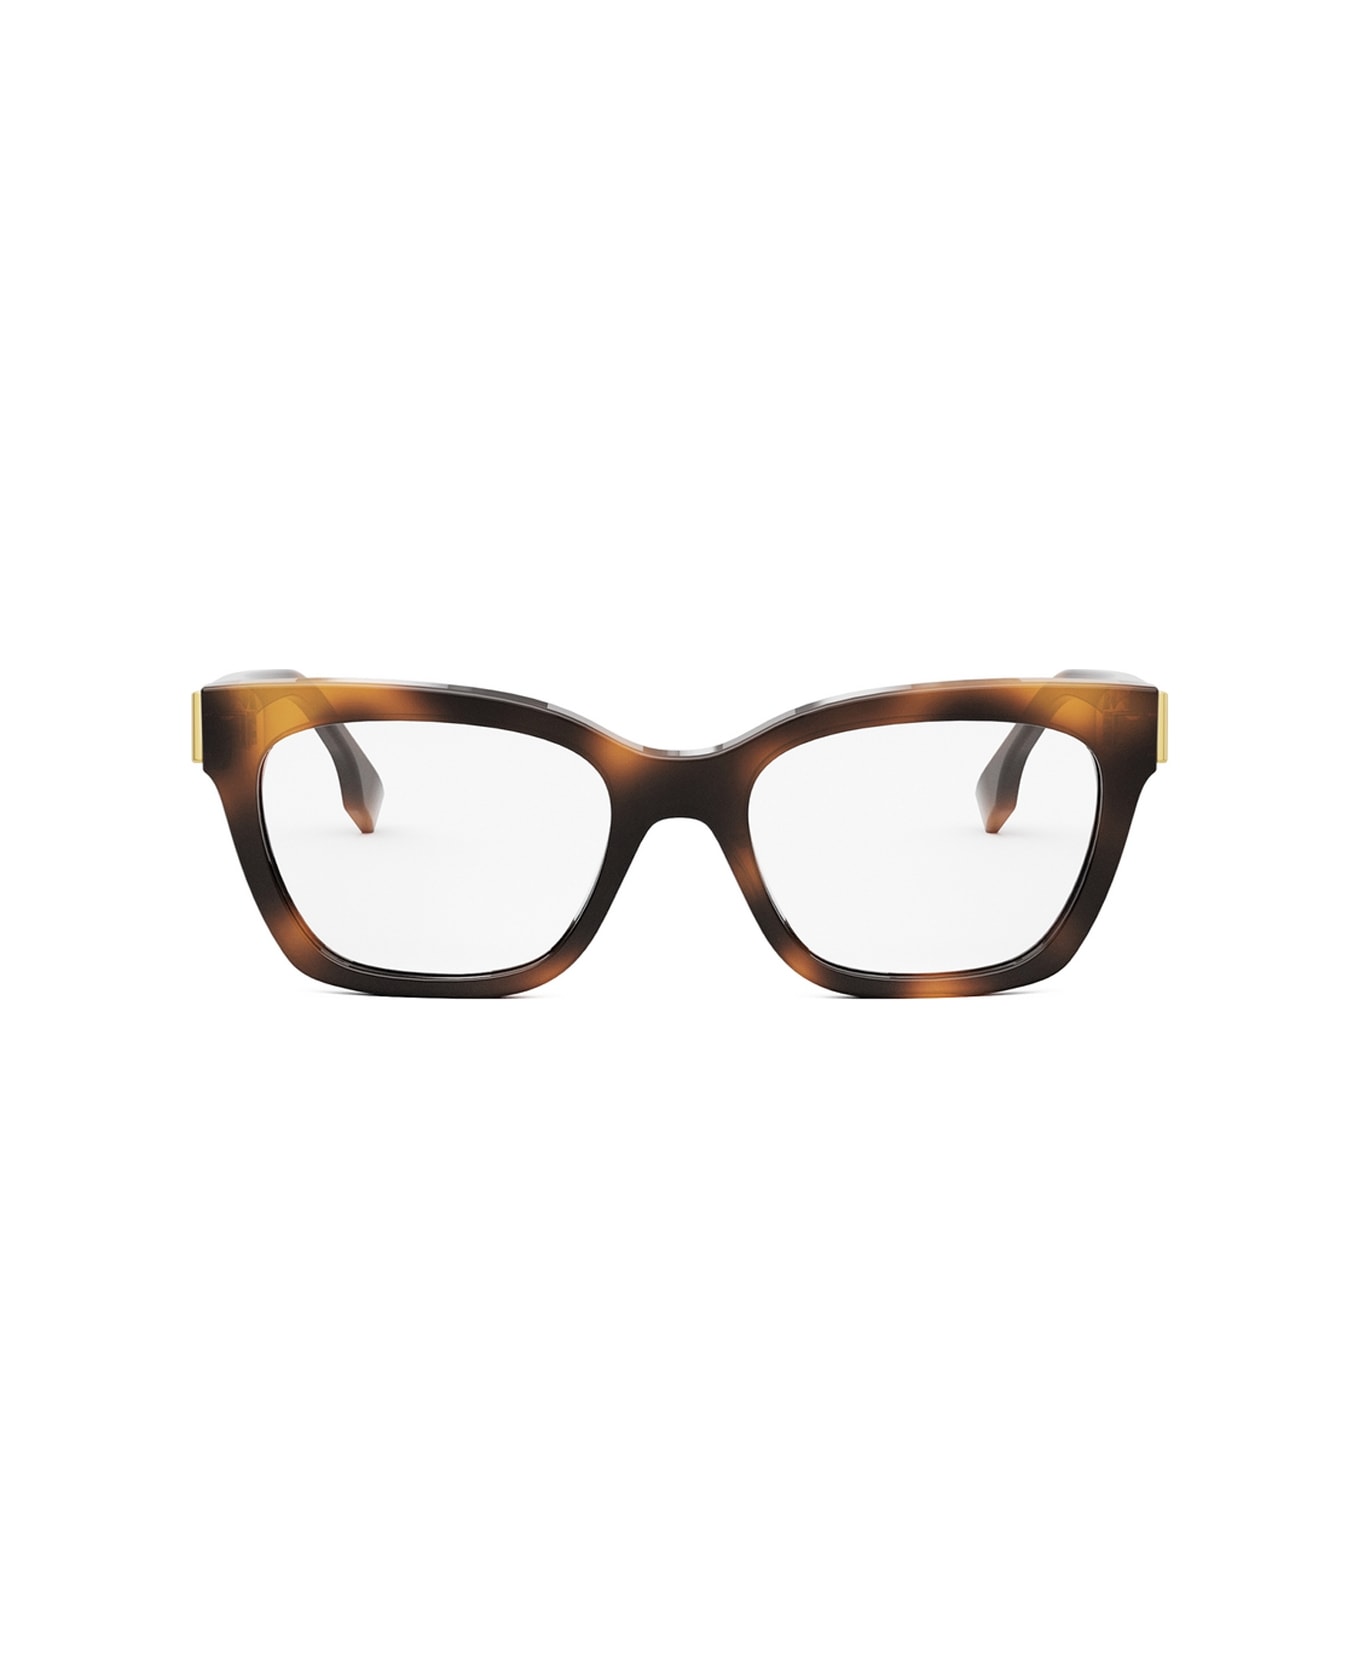 Fendi Eyewear Fe50073i 053 Glasses - Marrone